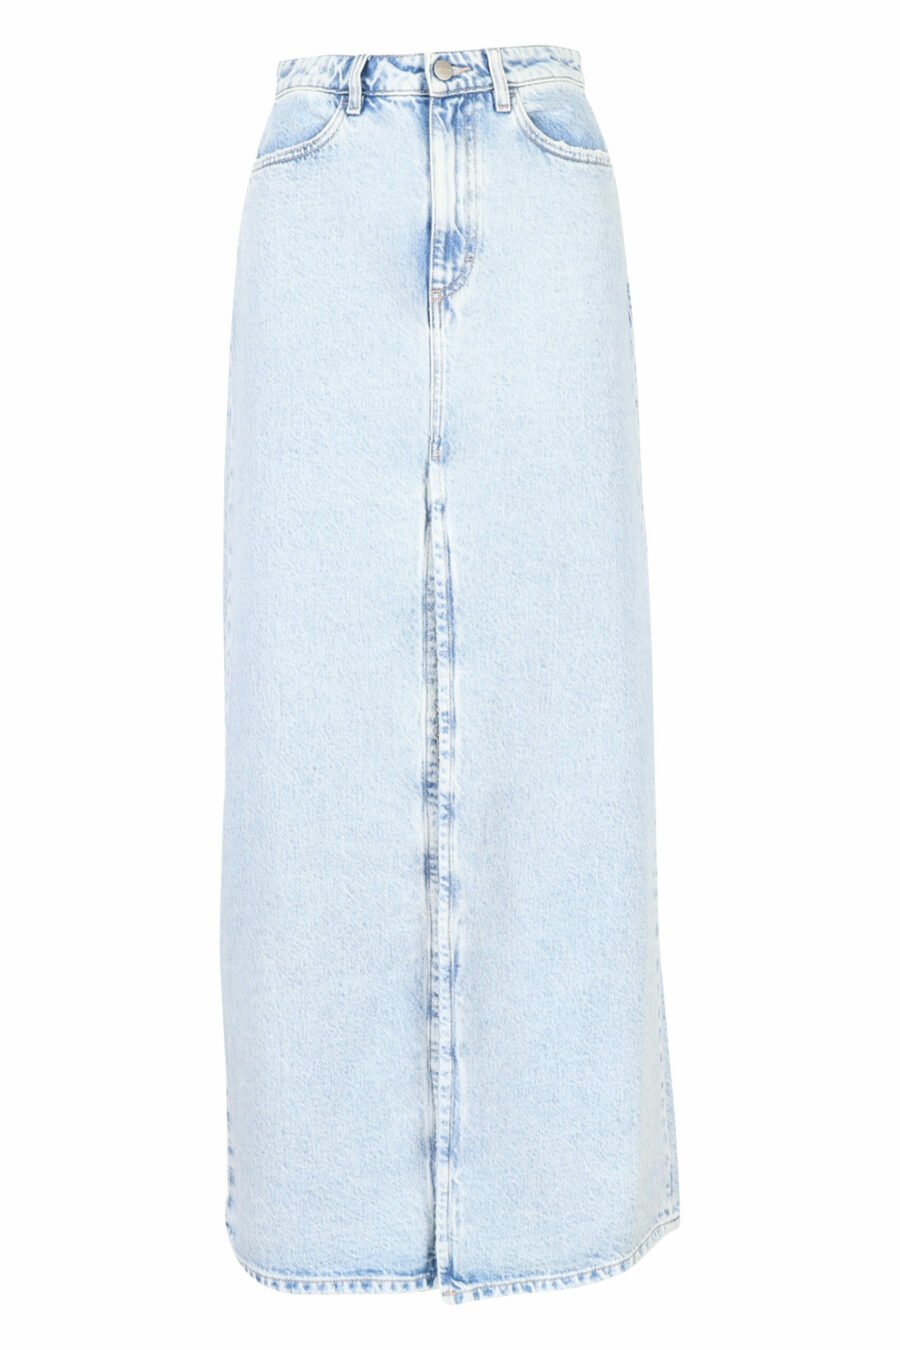 Long blue denim skirt "lara" with slit - 8052691166819 scaled